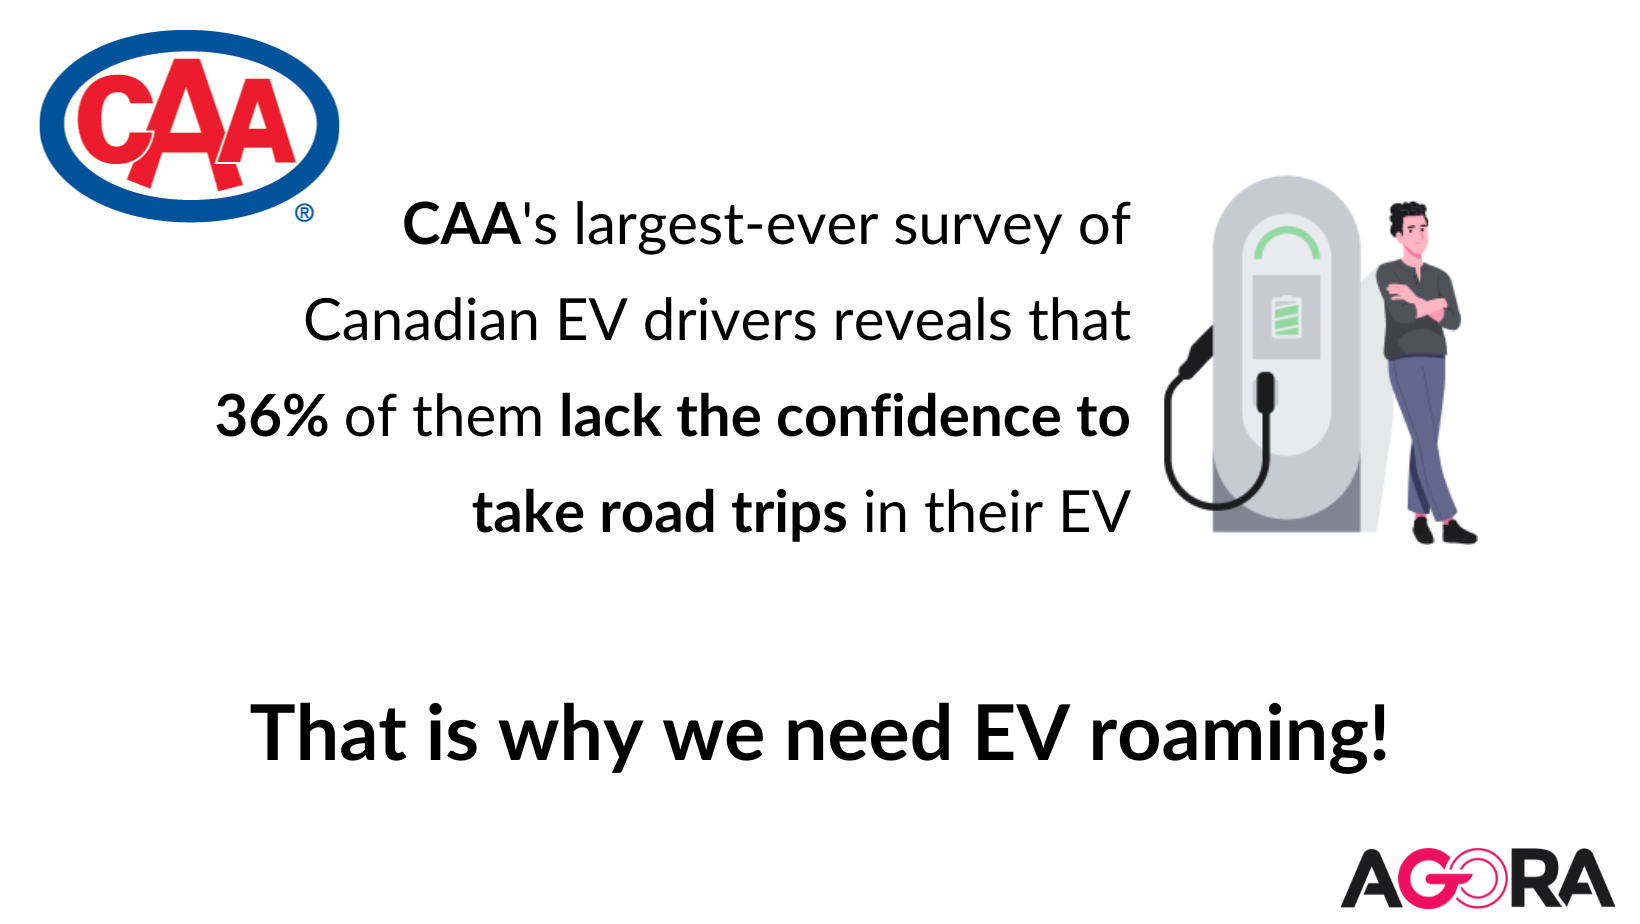 EV Roaming can help make long road trips easier for Canadian EV owners